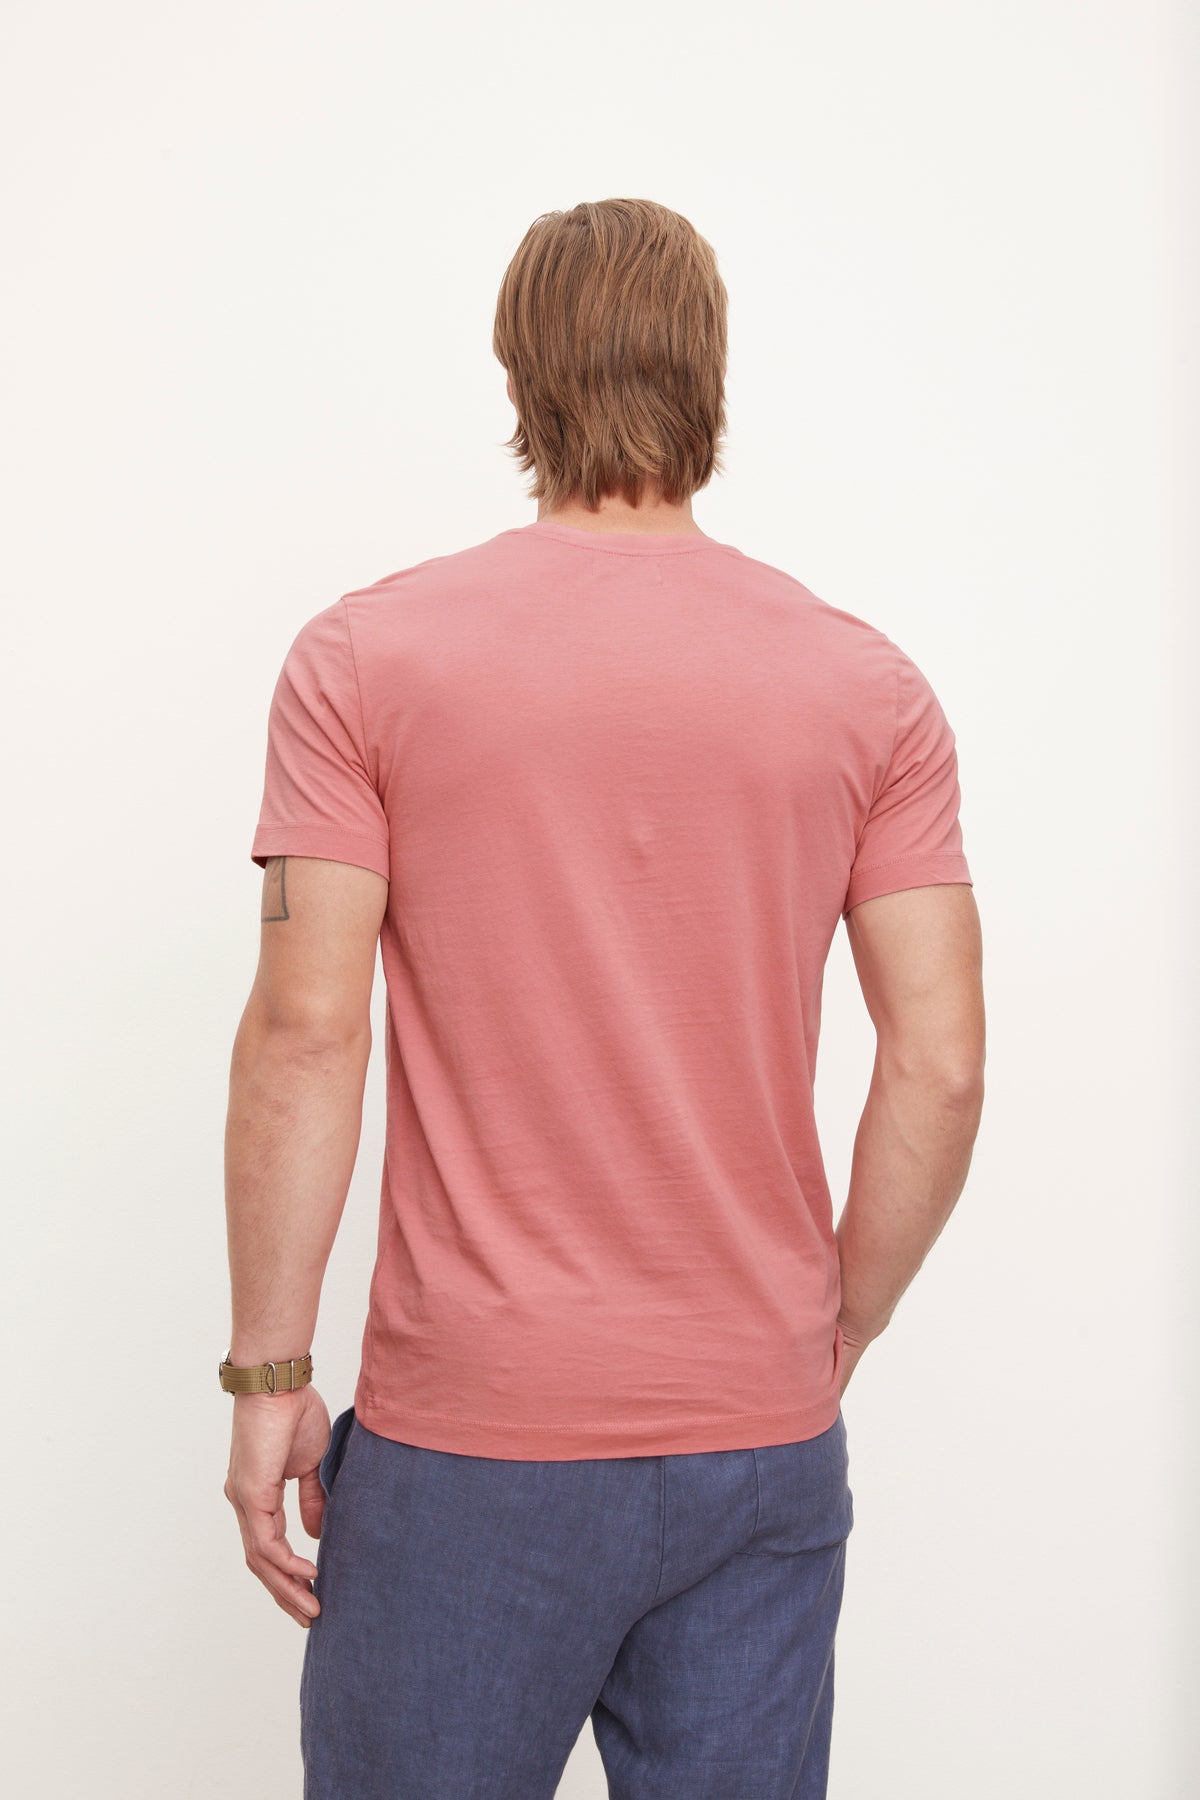 The back of a man wearing a Velvet by Graham & Spencer HOWARD WHISPER CLASSIC CREW NECK TEE t-shirt.-36009021309121